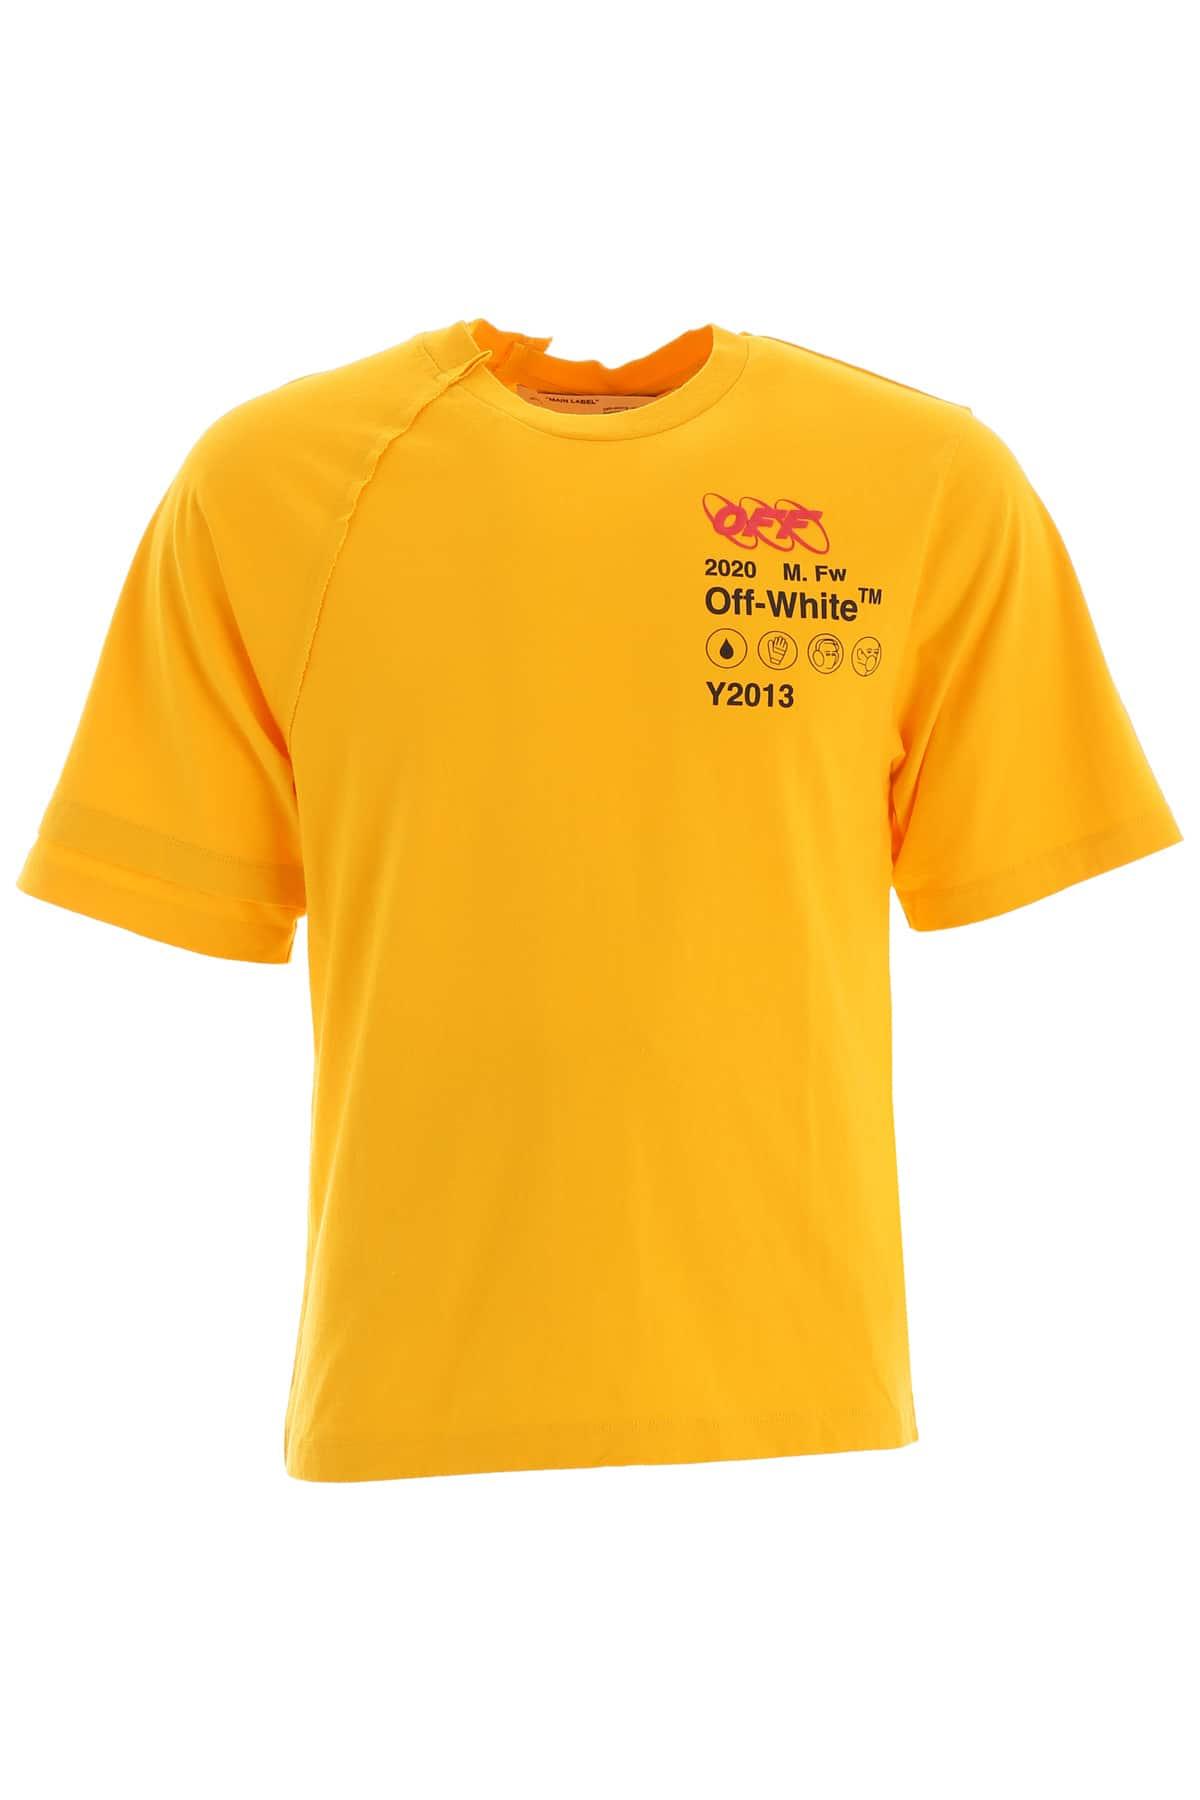 Off-White c/o Virgil Abloh X Champion Yellow T-shirt for Men